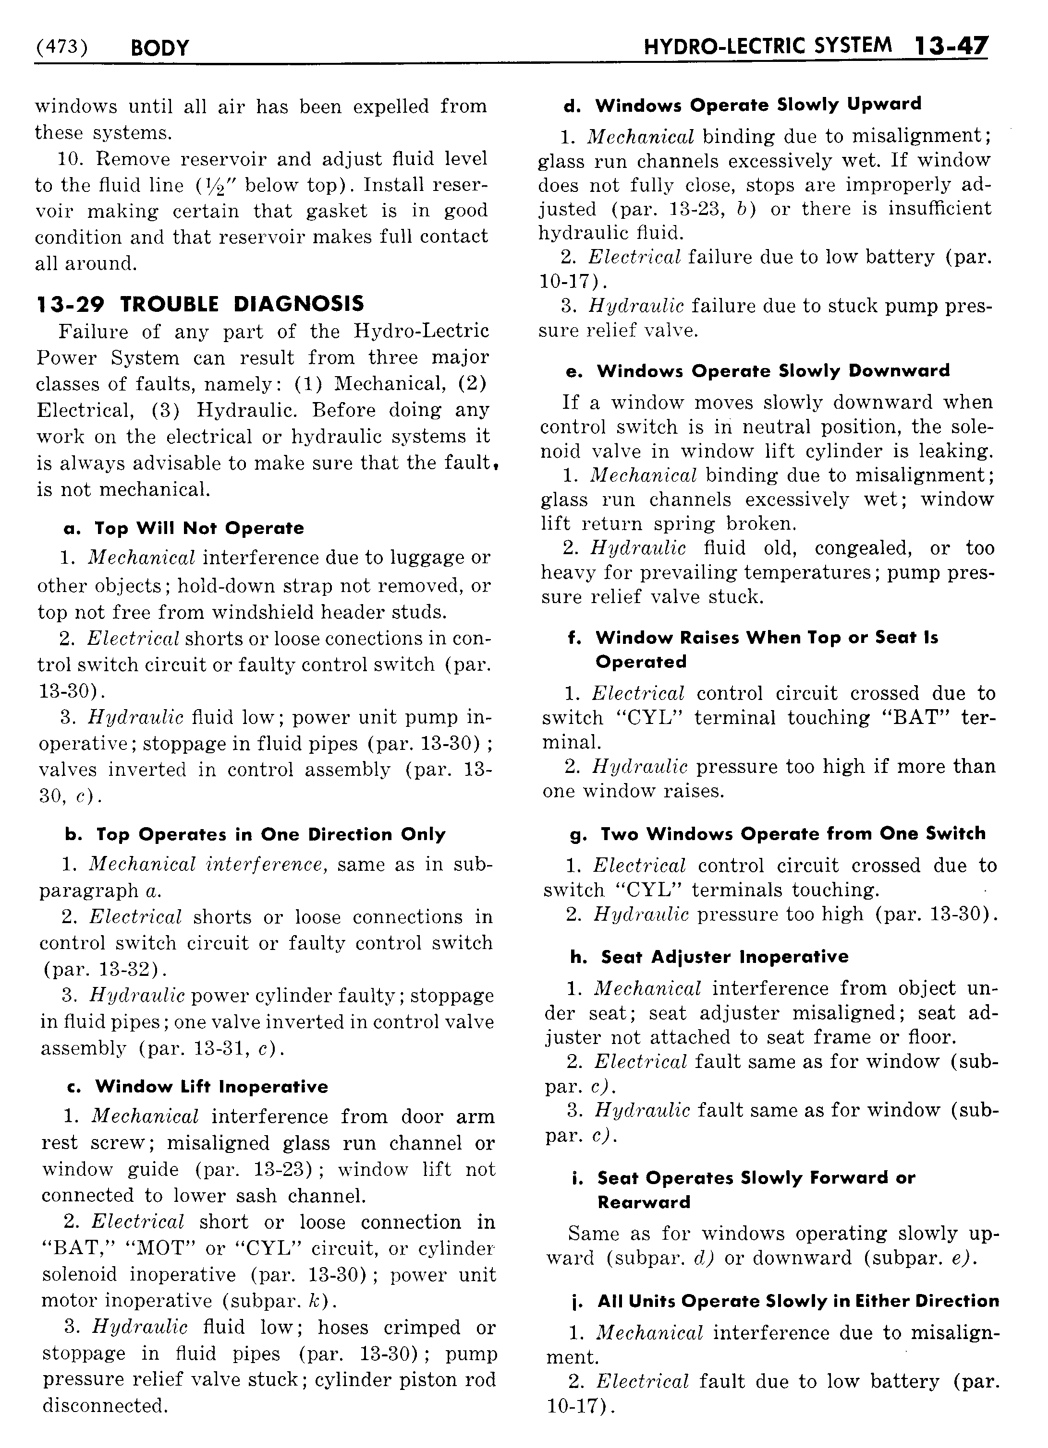 n_14 1951 Buick Shop Manual - Body-047-047.jpg